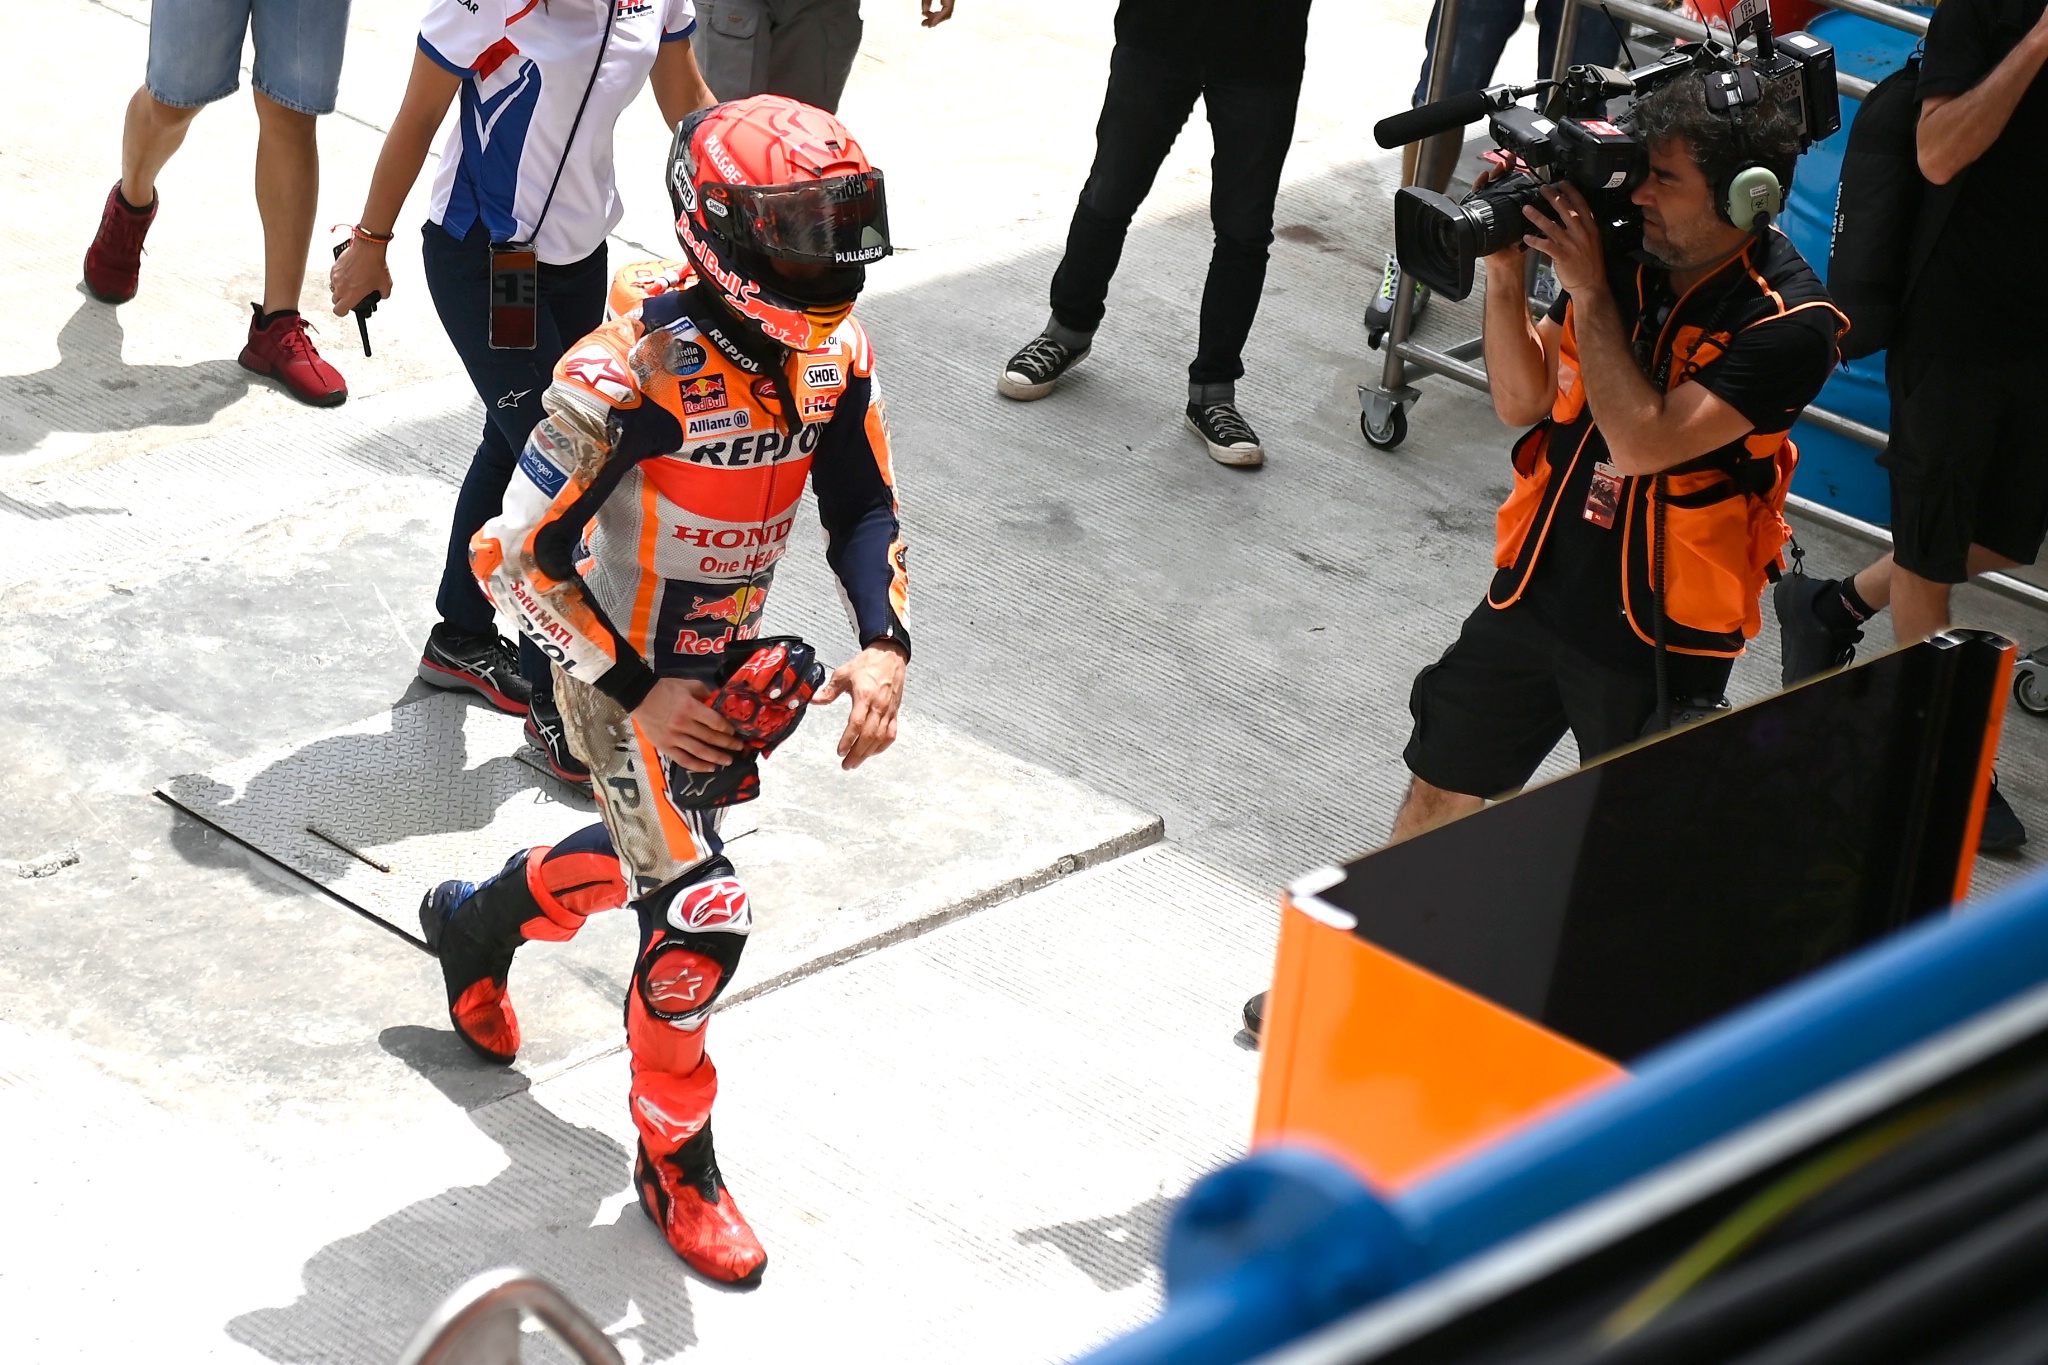 Marc Marquez arriving back to the paddock after highsiding, MotoGP, Indonesian MotoGP, 20 March 2022